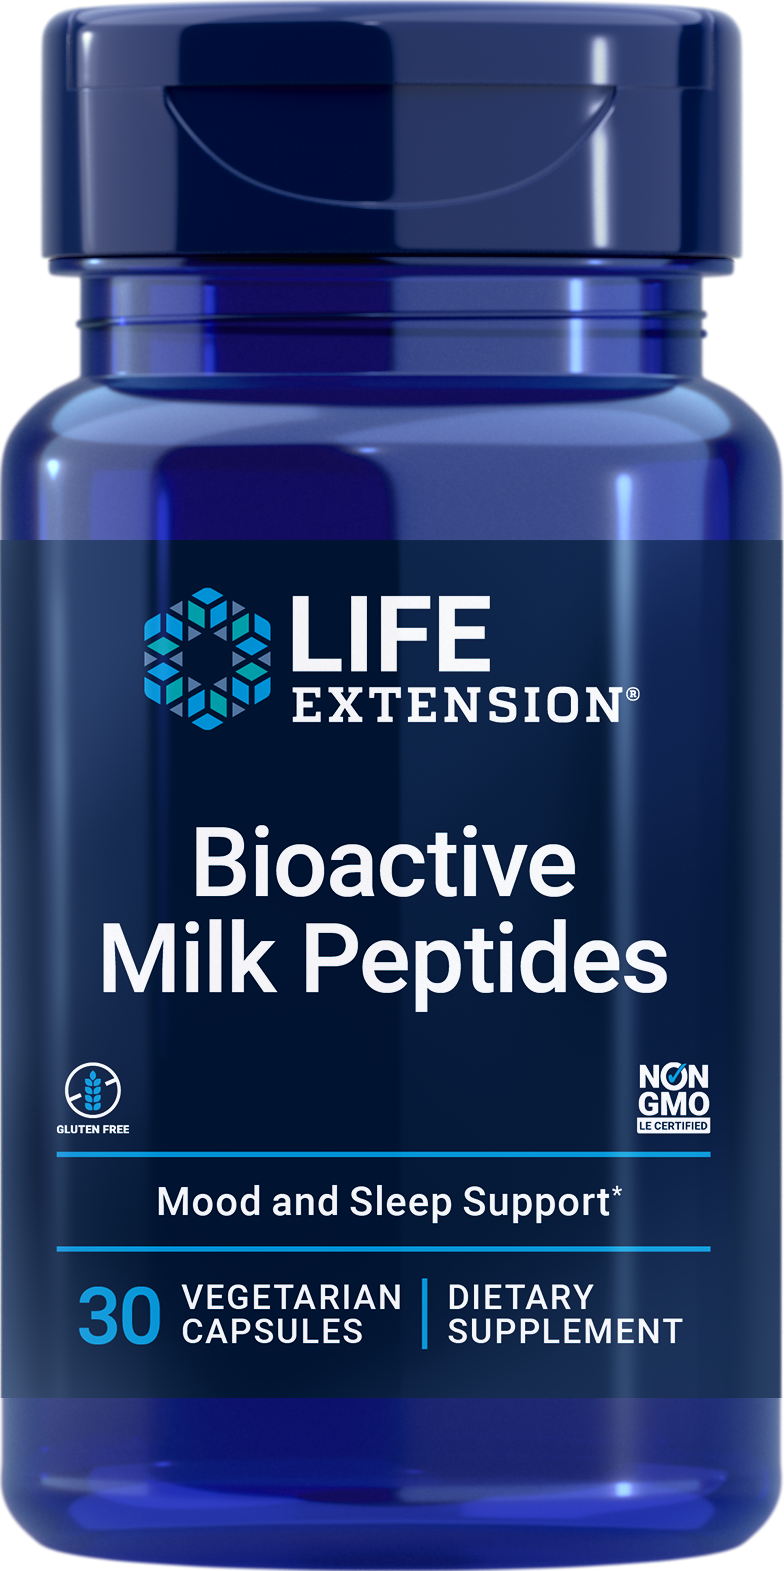 Bioactive Milk Peptides